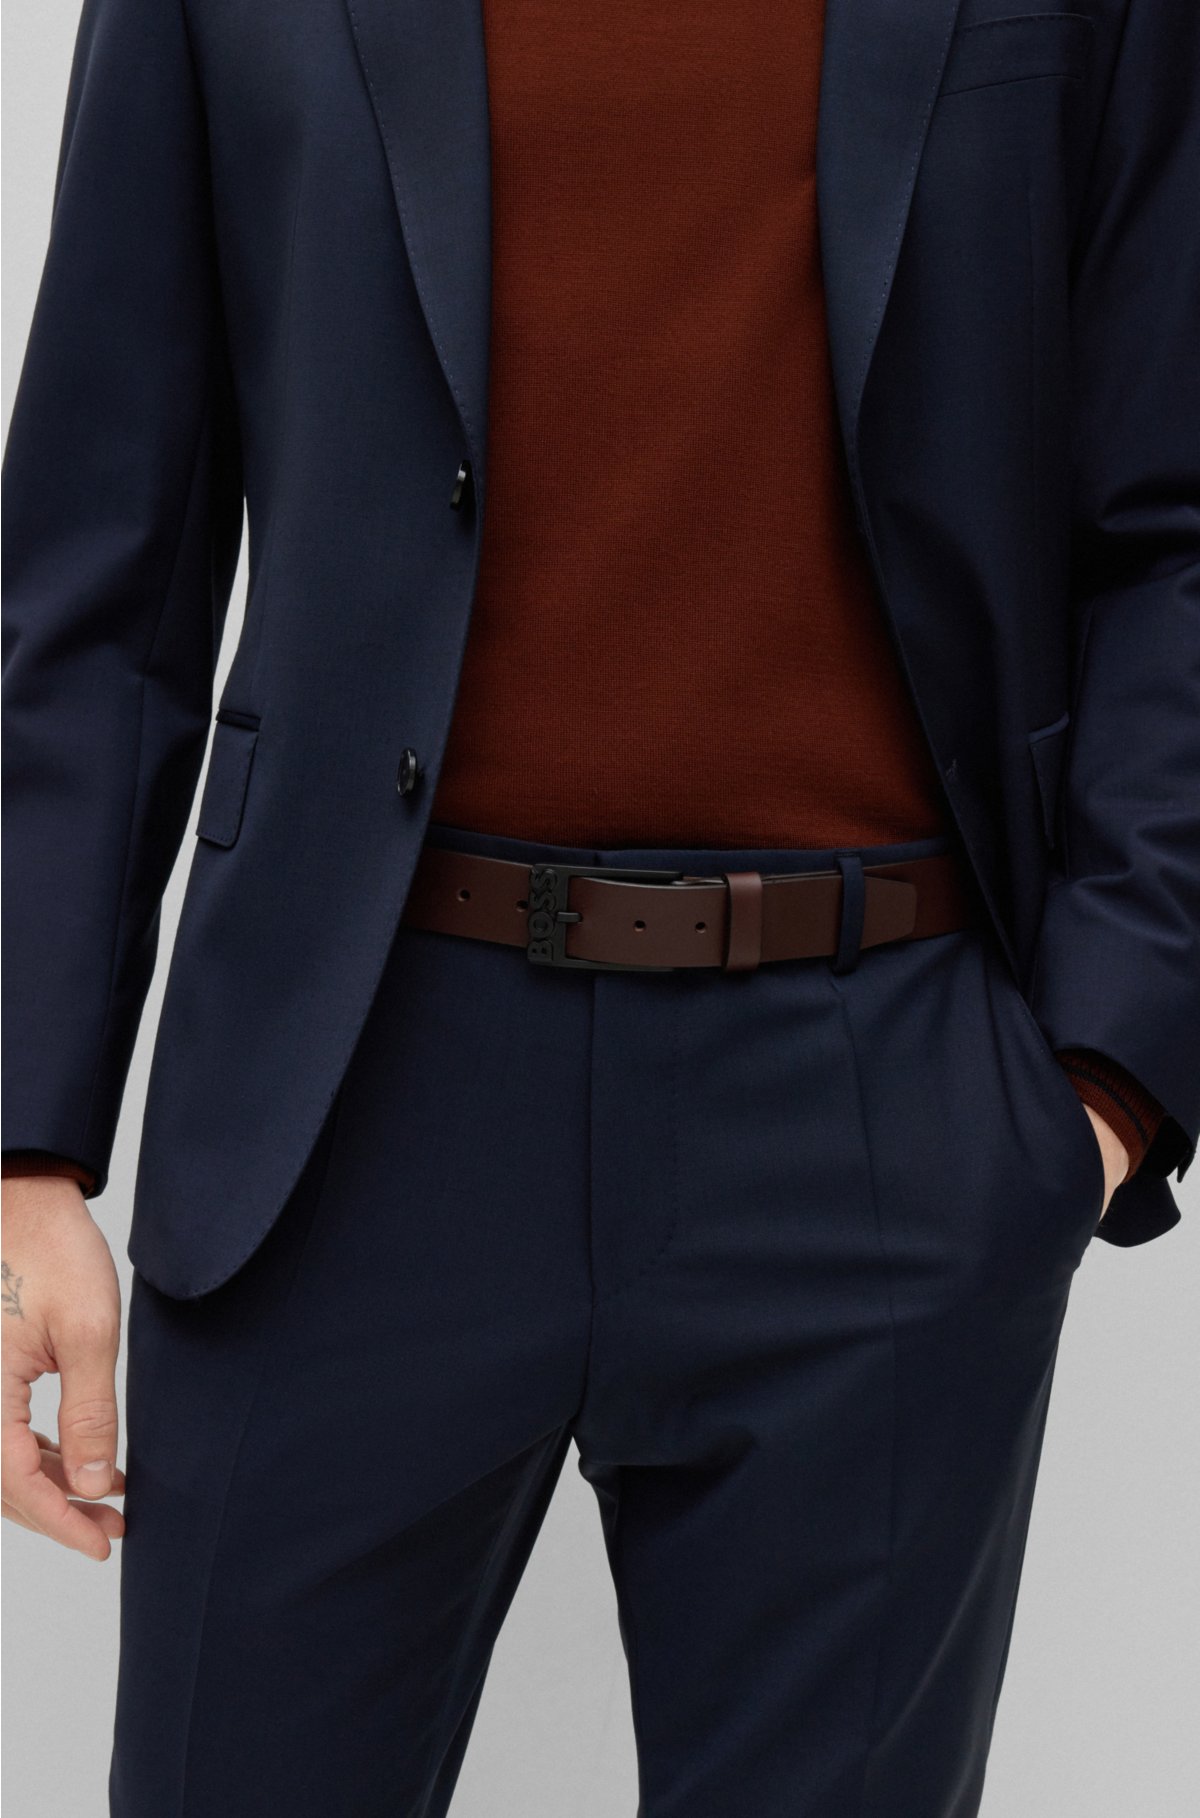 SUITSUPPLY Dark Brown Belt, Italian Cow Leather, Size: 34, Men's Belts